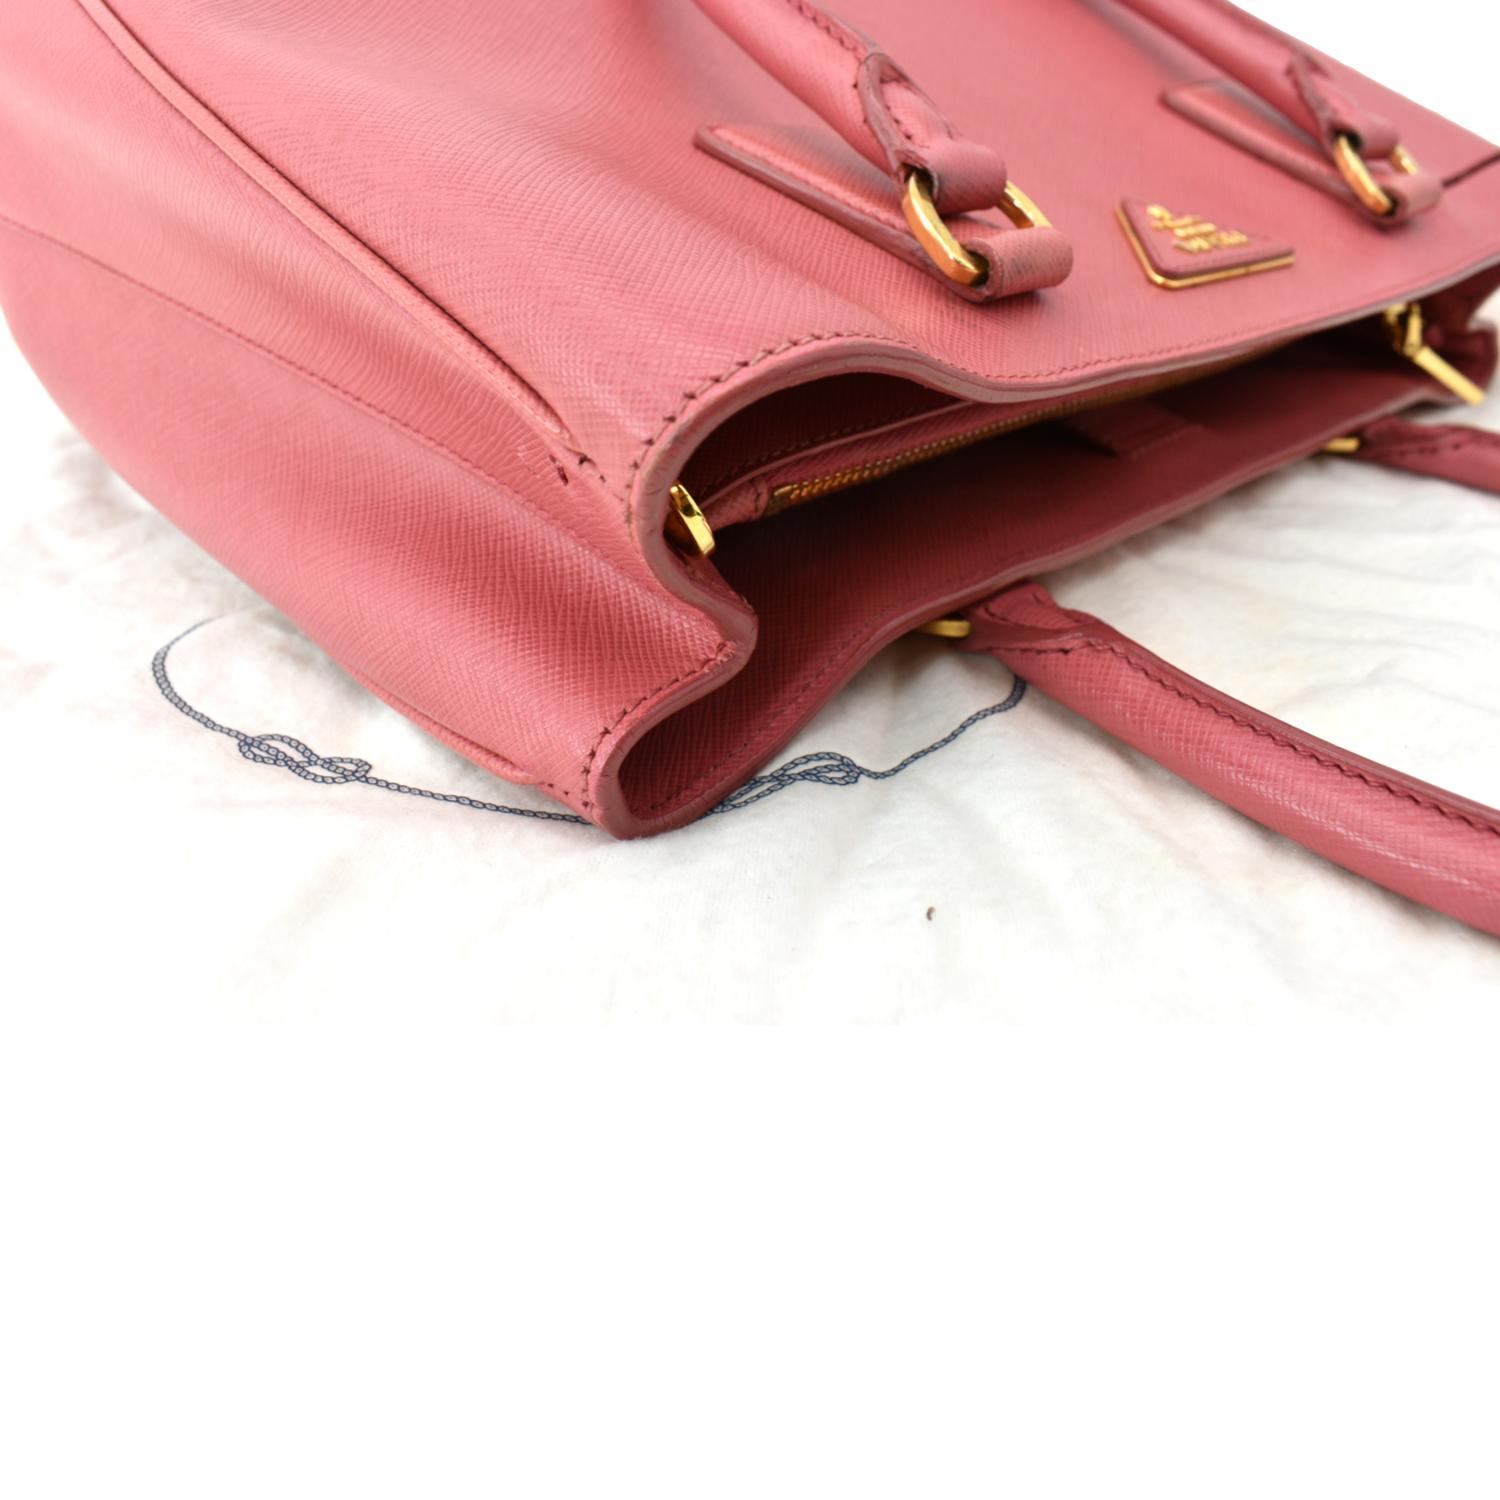 Alabaster Pink Small Prada Galleria Saffiano Leather Bag